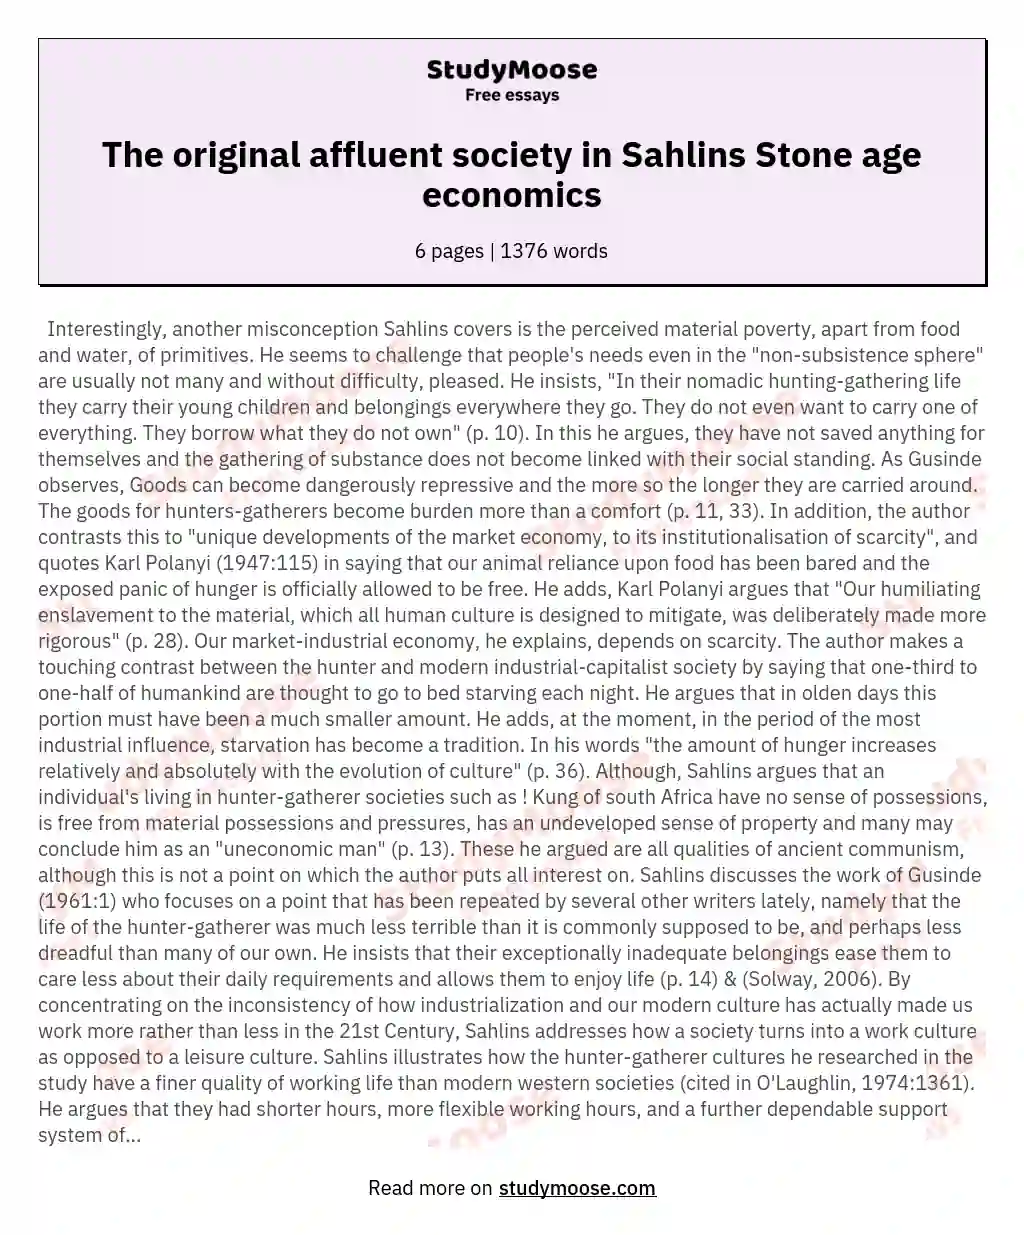 The original affluent society in Sahlins Stone age economics